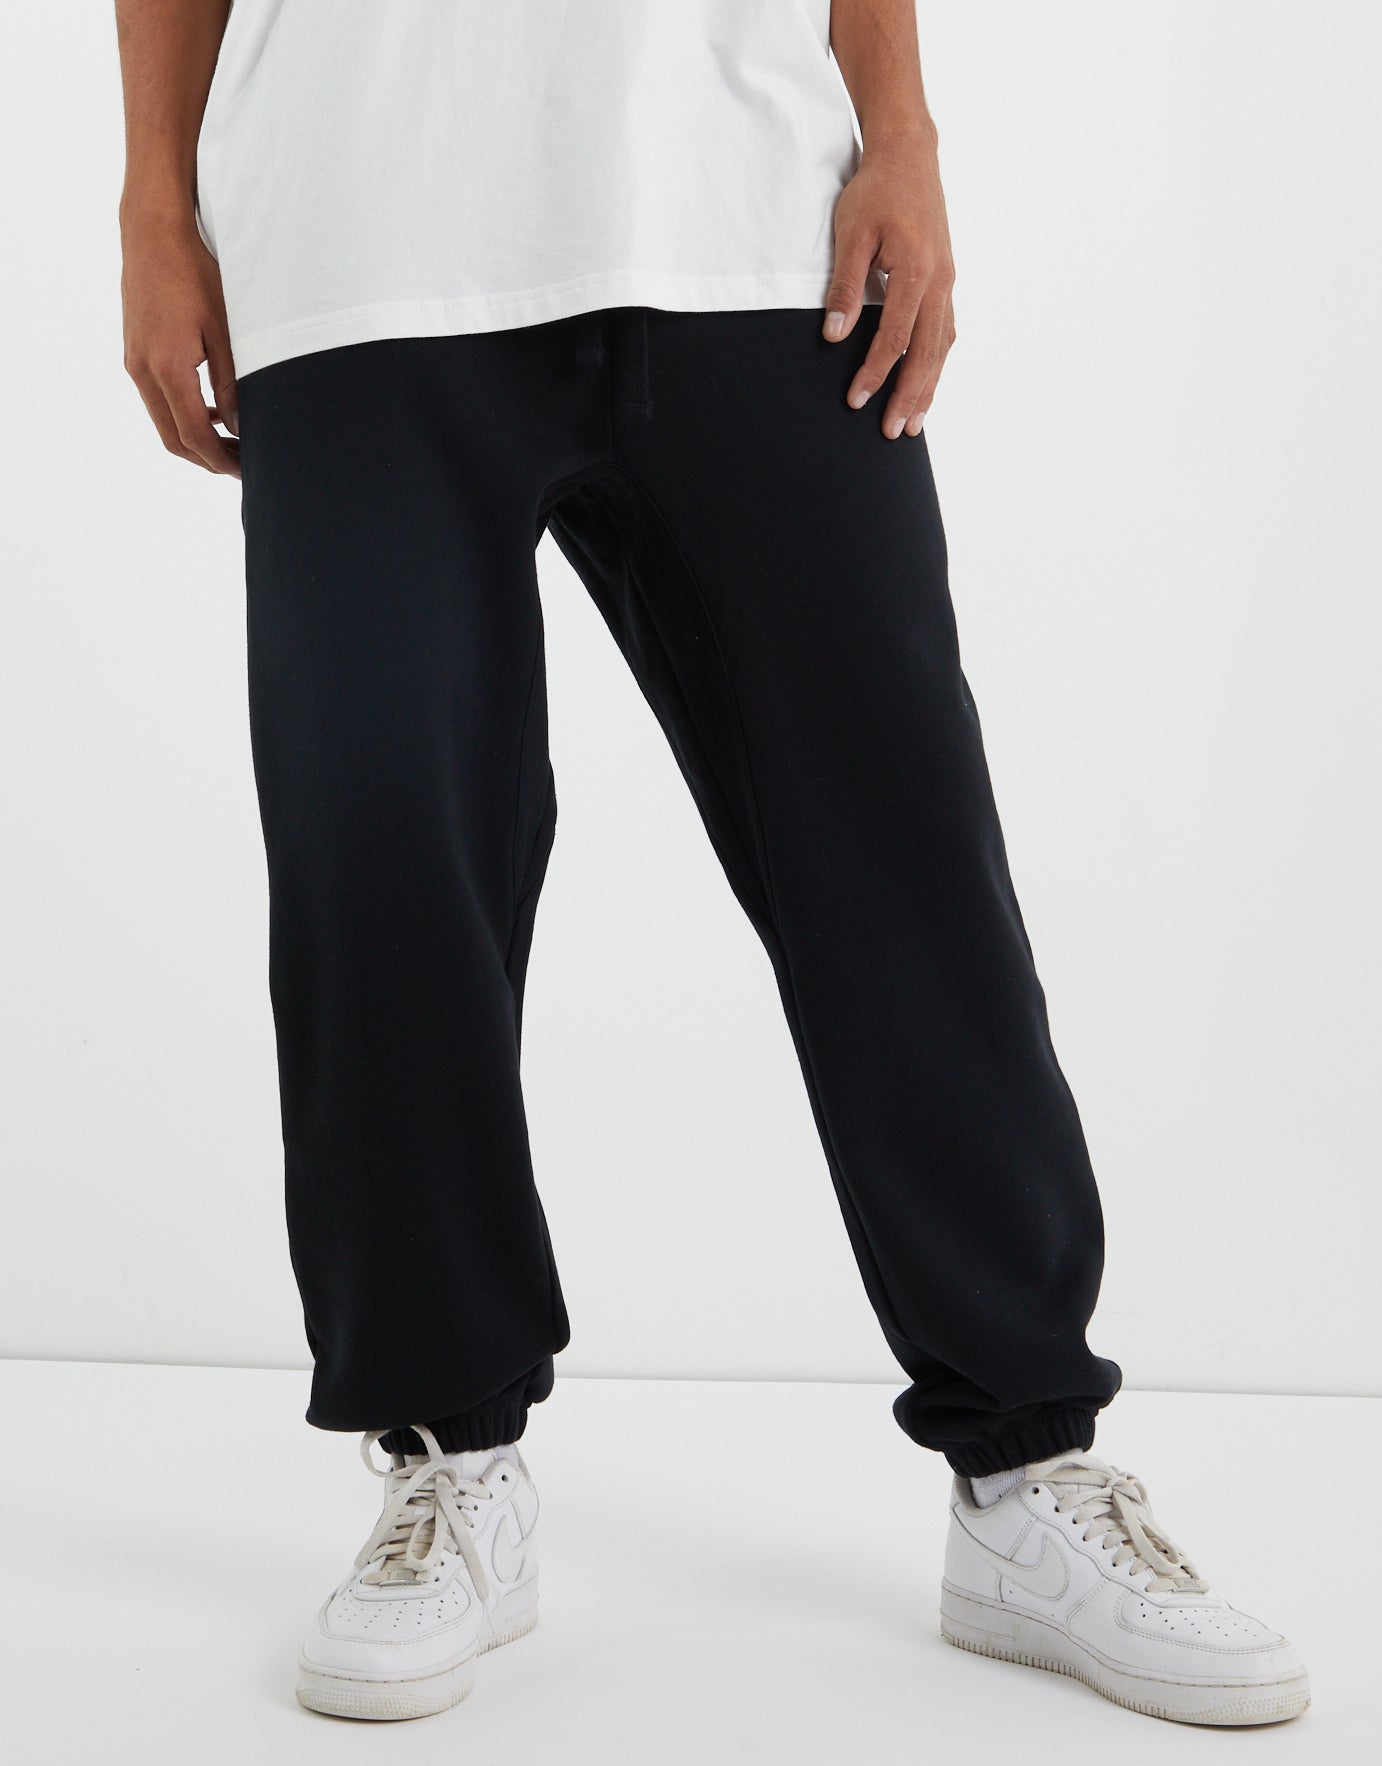 Blue Ikat Cotton elastic Pants With two Pockets | Kritikala